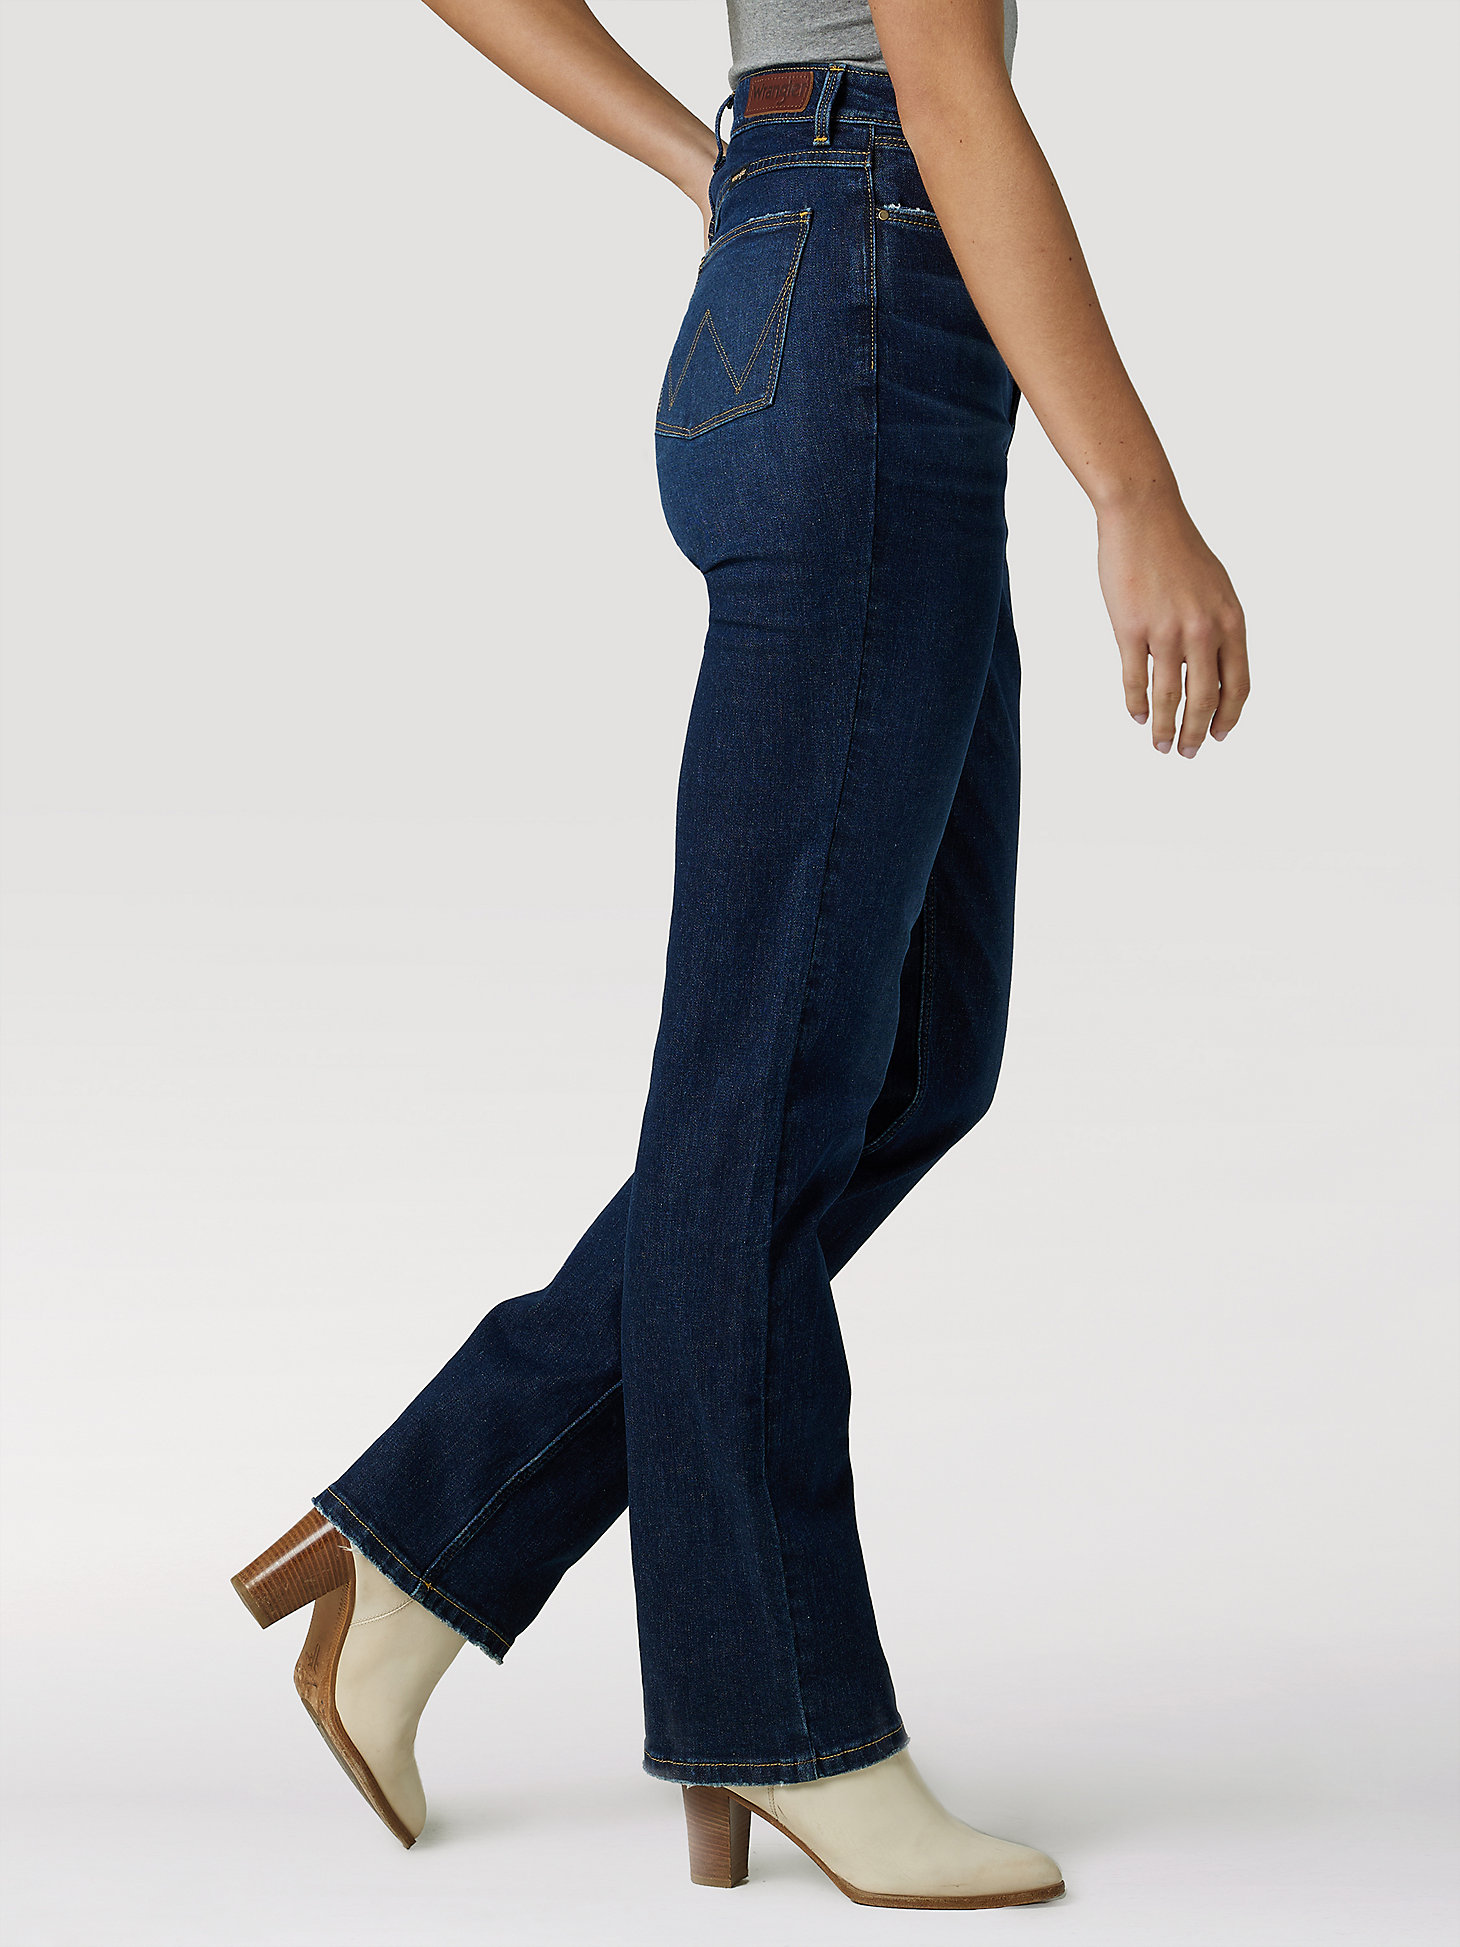 Women's Wrangler® High Rise True Straight Leg Jean in Berry Dark alternative view 5